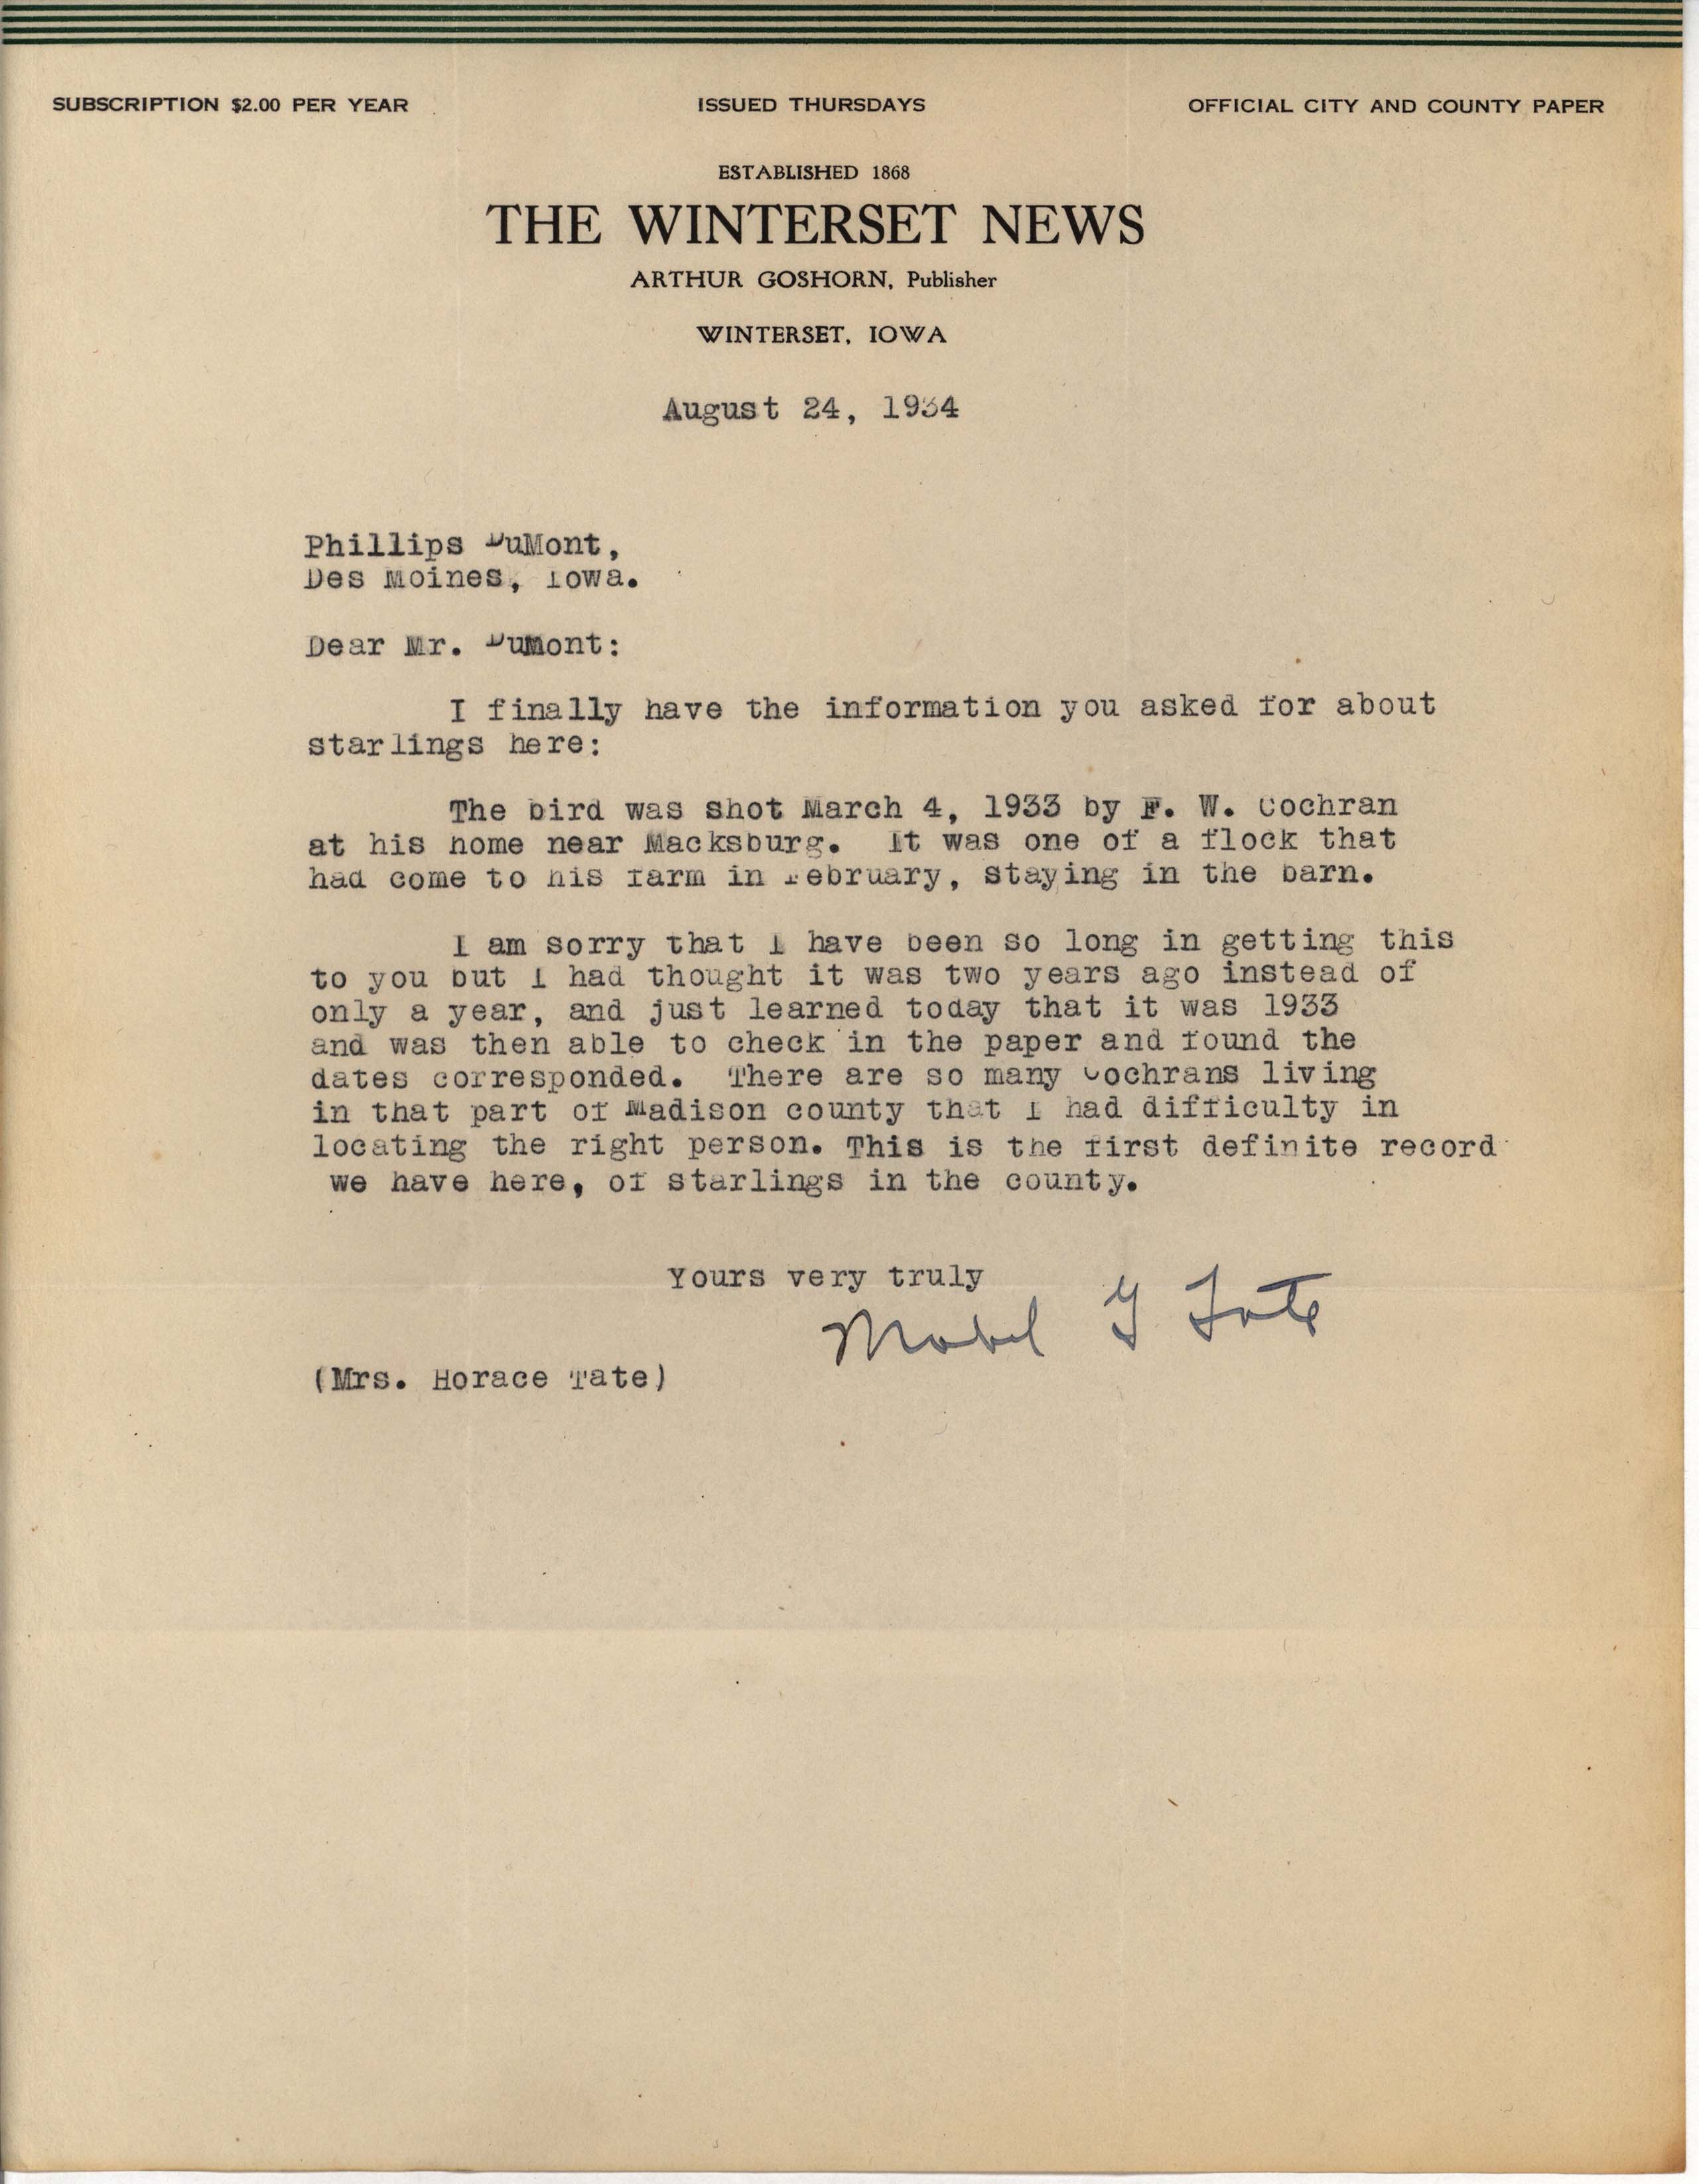 Mabel Tate letter to Philip DuMont regarding Starling shot near Macksburg, August 24, 1934